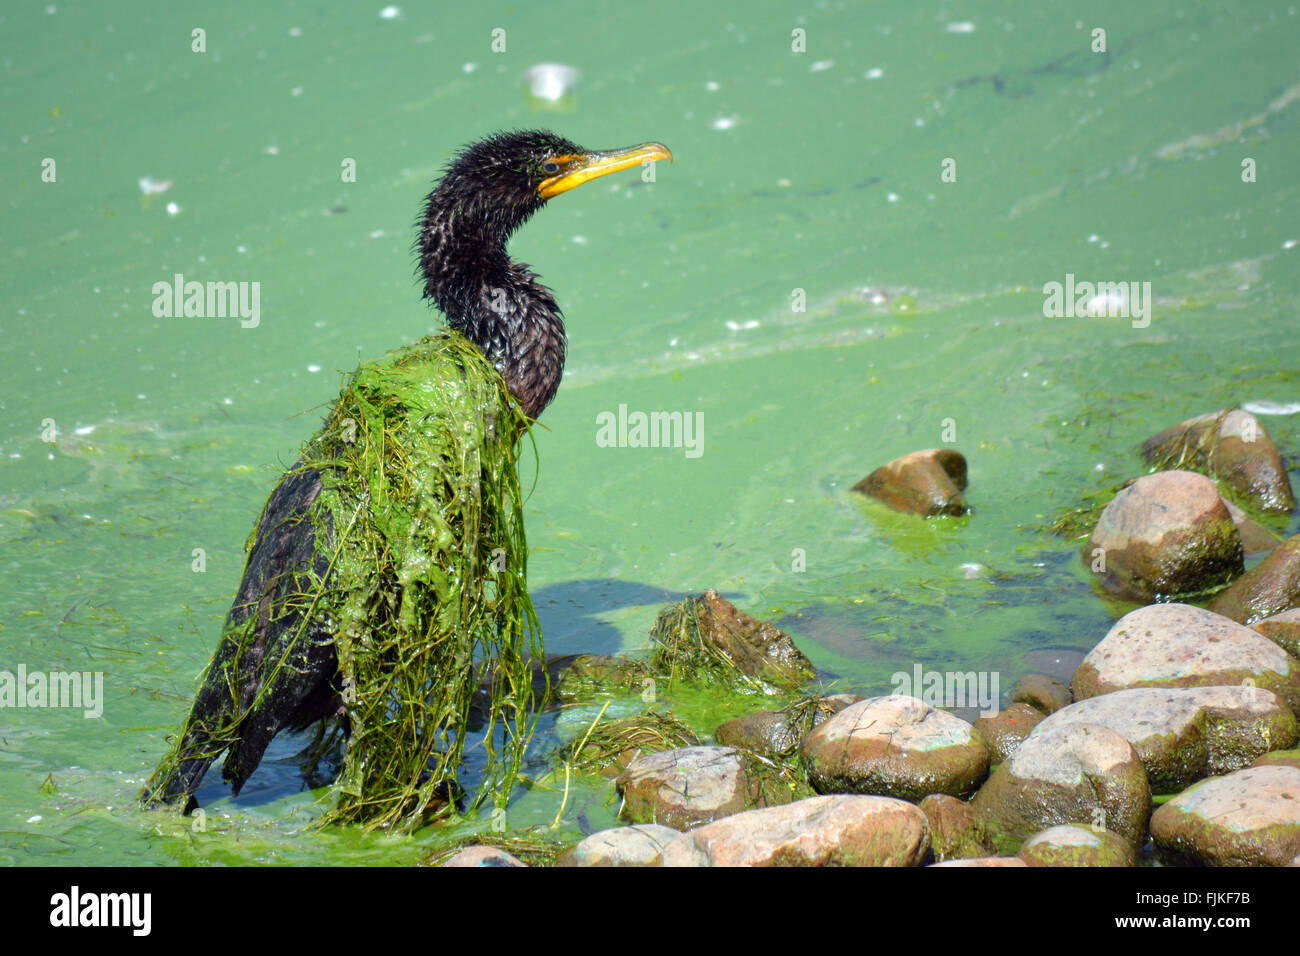 A Black Cormorant Bird Covered in Green Algae. Stock Photo